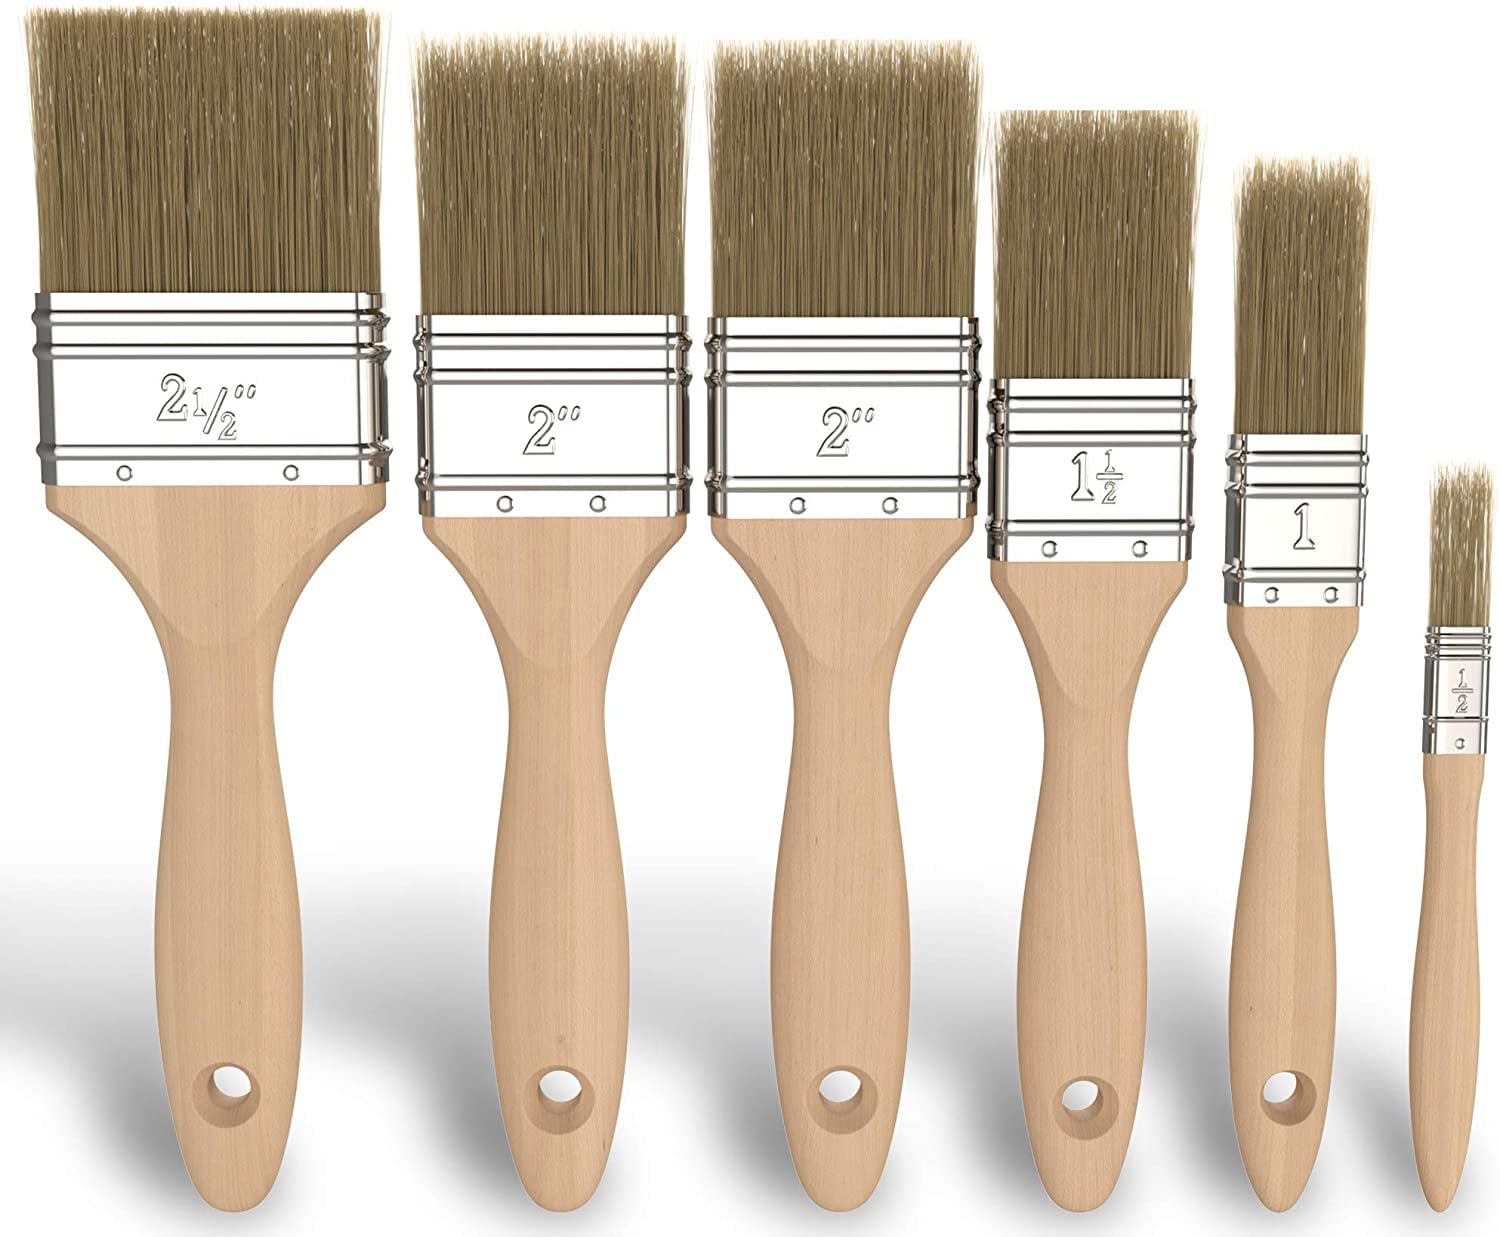 2. Professional Nail Art Brush Set - Fine Detail Brushes - wide 1